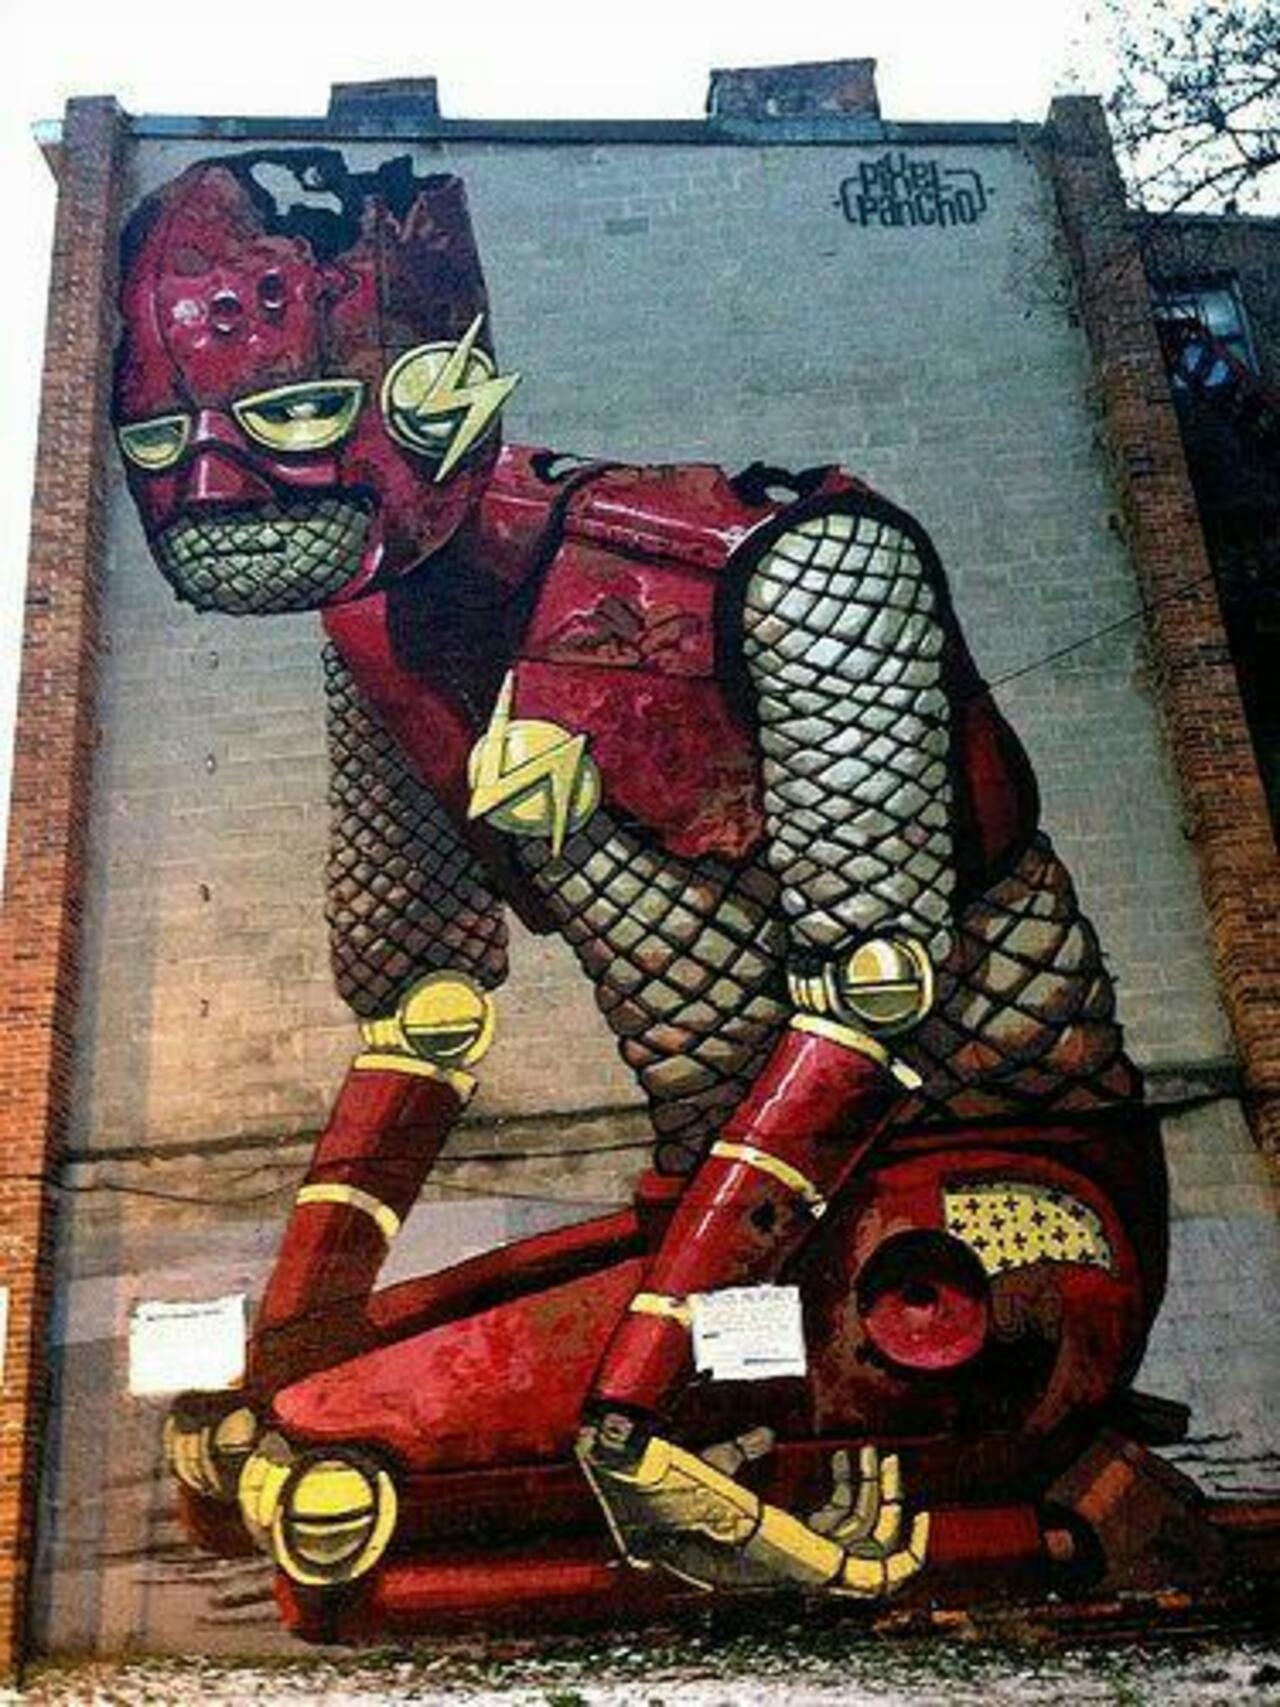 #artwork of pixel pancho 
#art #streetart #graffiti #mural #urbanart 
https://www.flickr.com/photos/loisstavsky/8312887622/ http://t.co/hTFjvP0nox